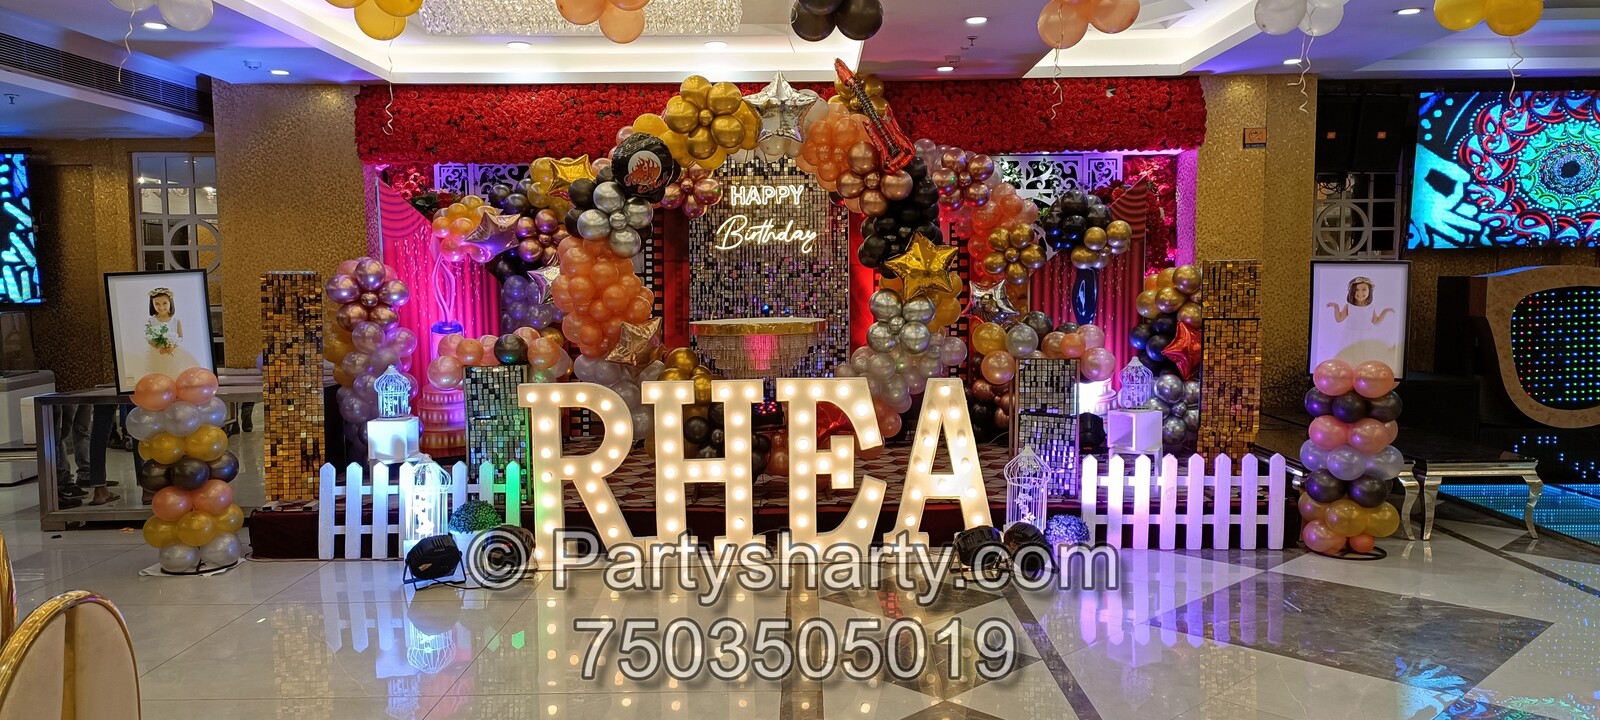 Party Sharty - birthday party organisers in delhi, birthday party boys, girls themes